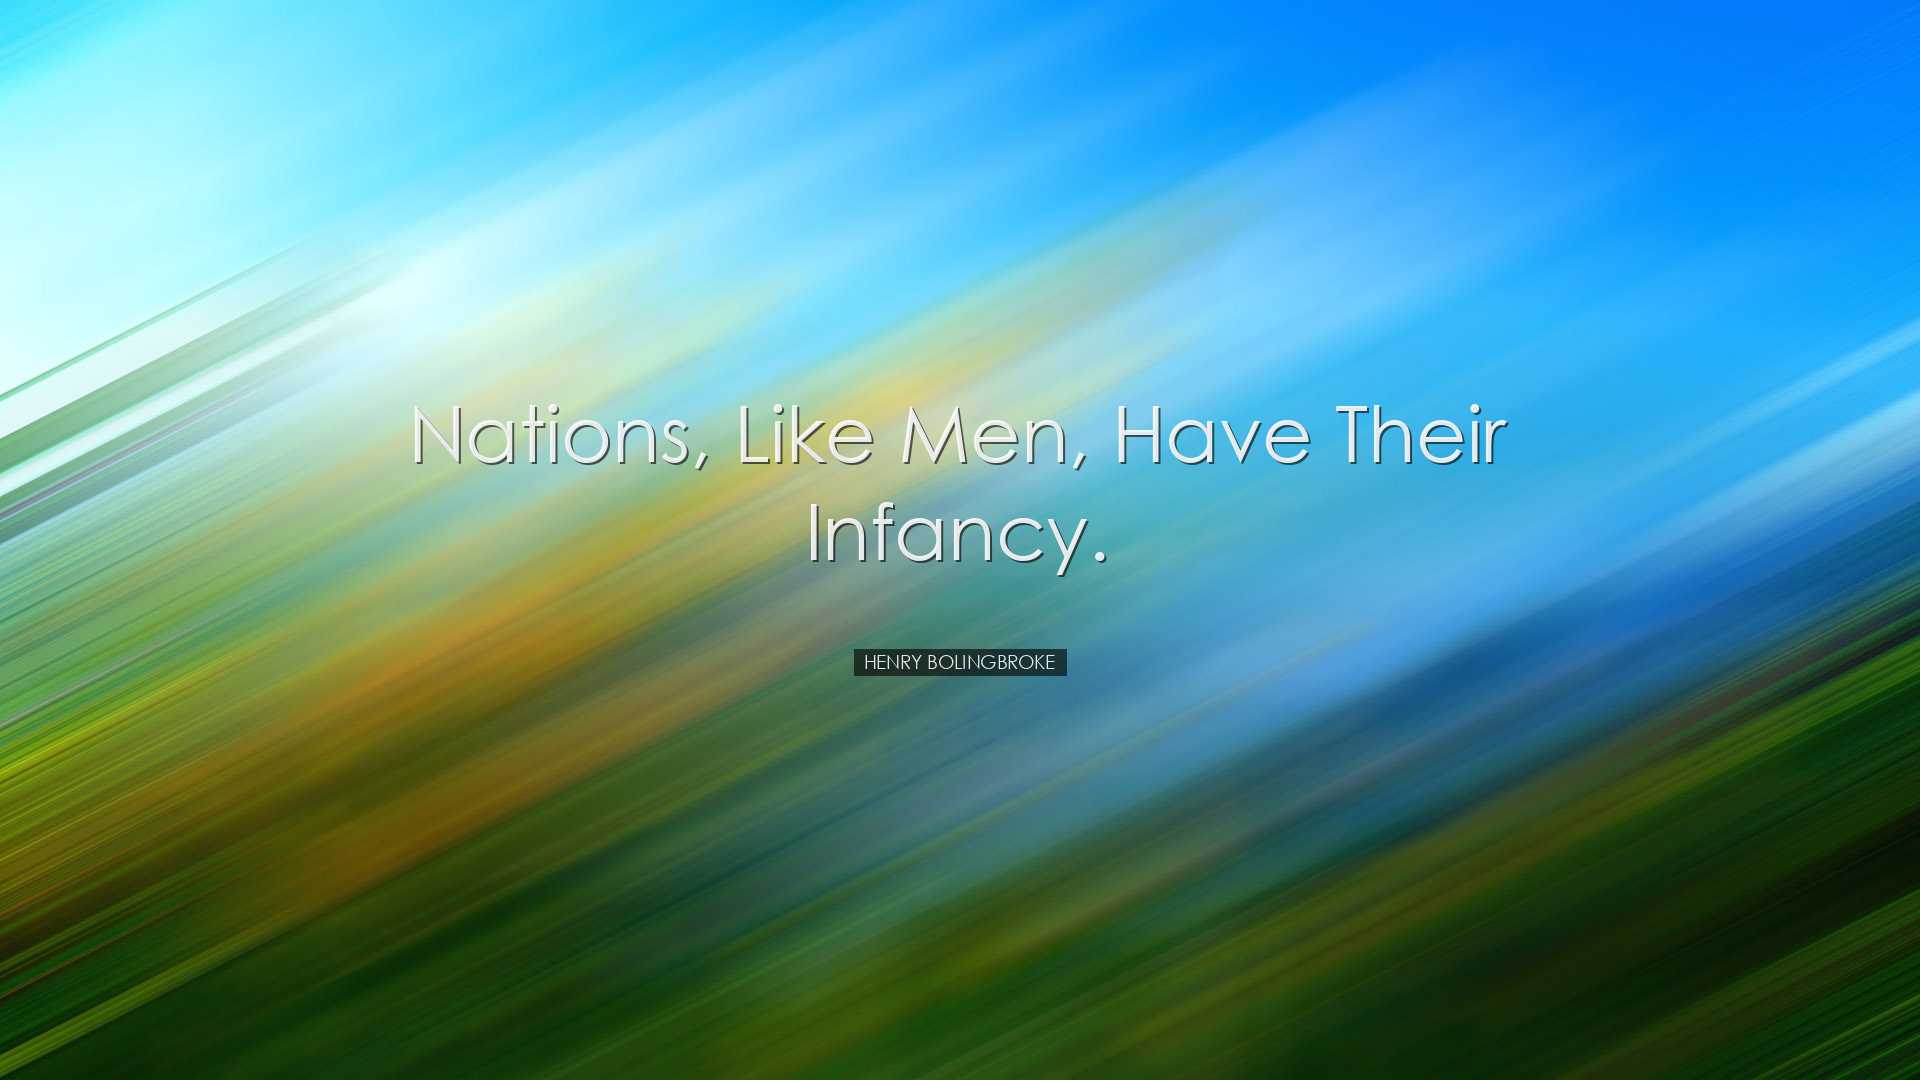 Nations, like men, have their infancy. - Henry Bolingbroke